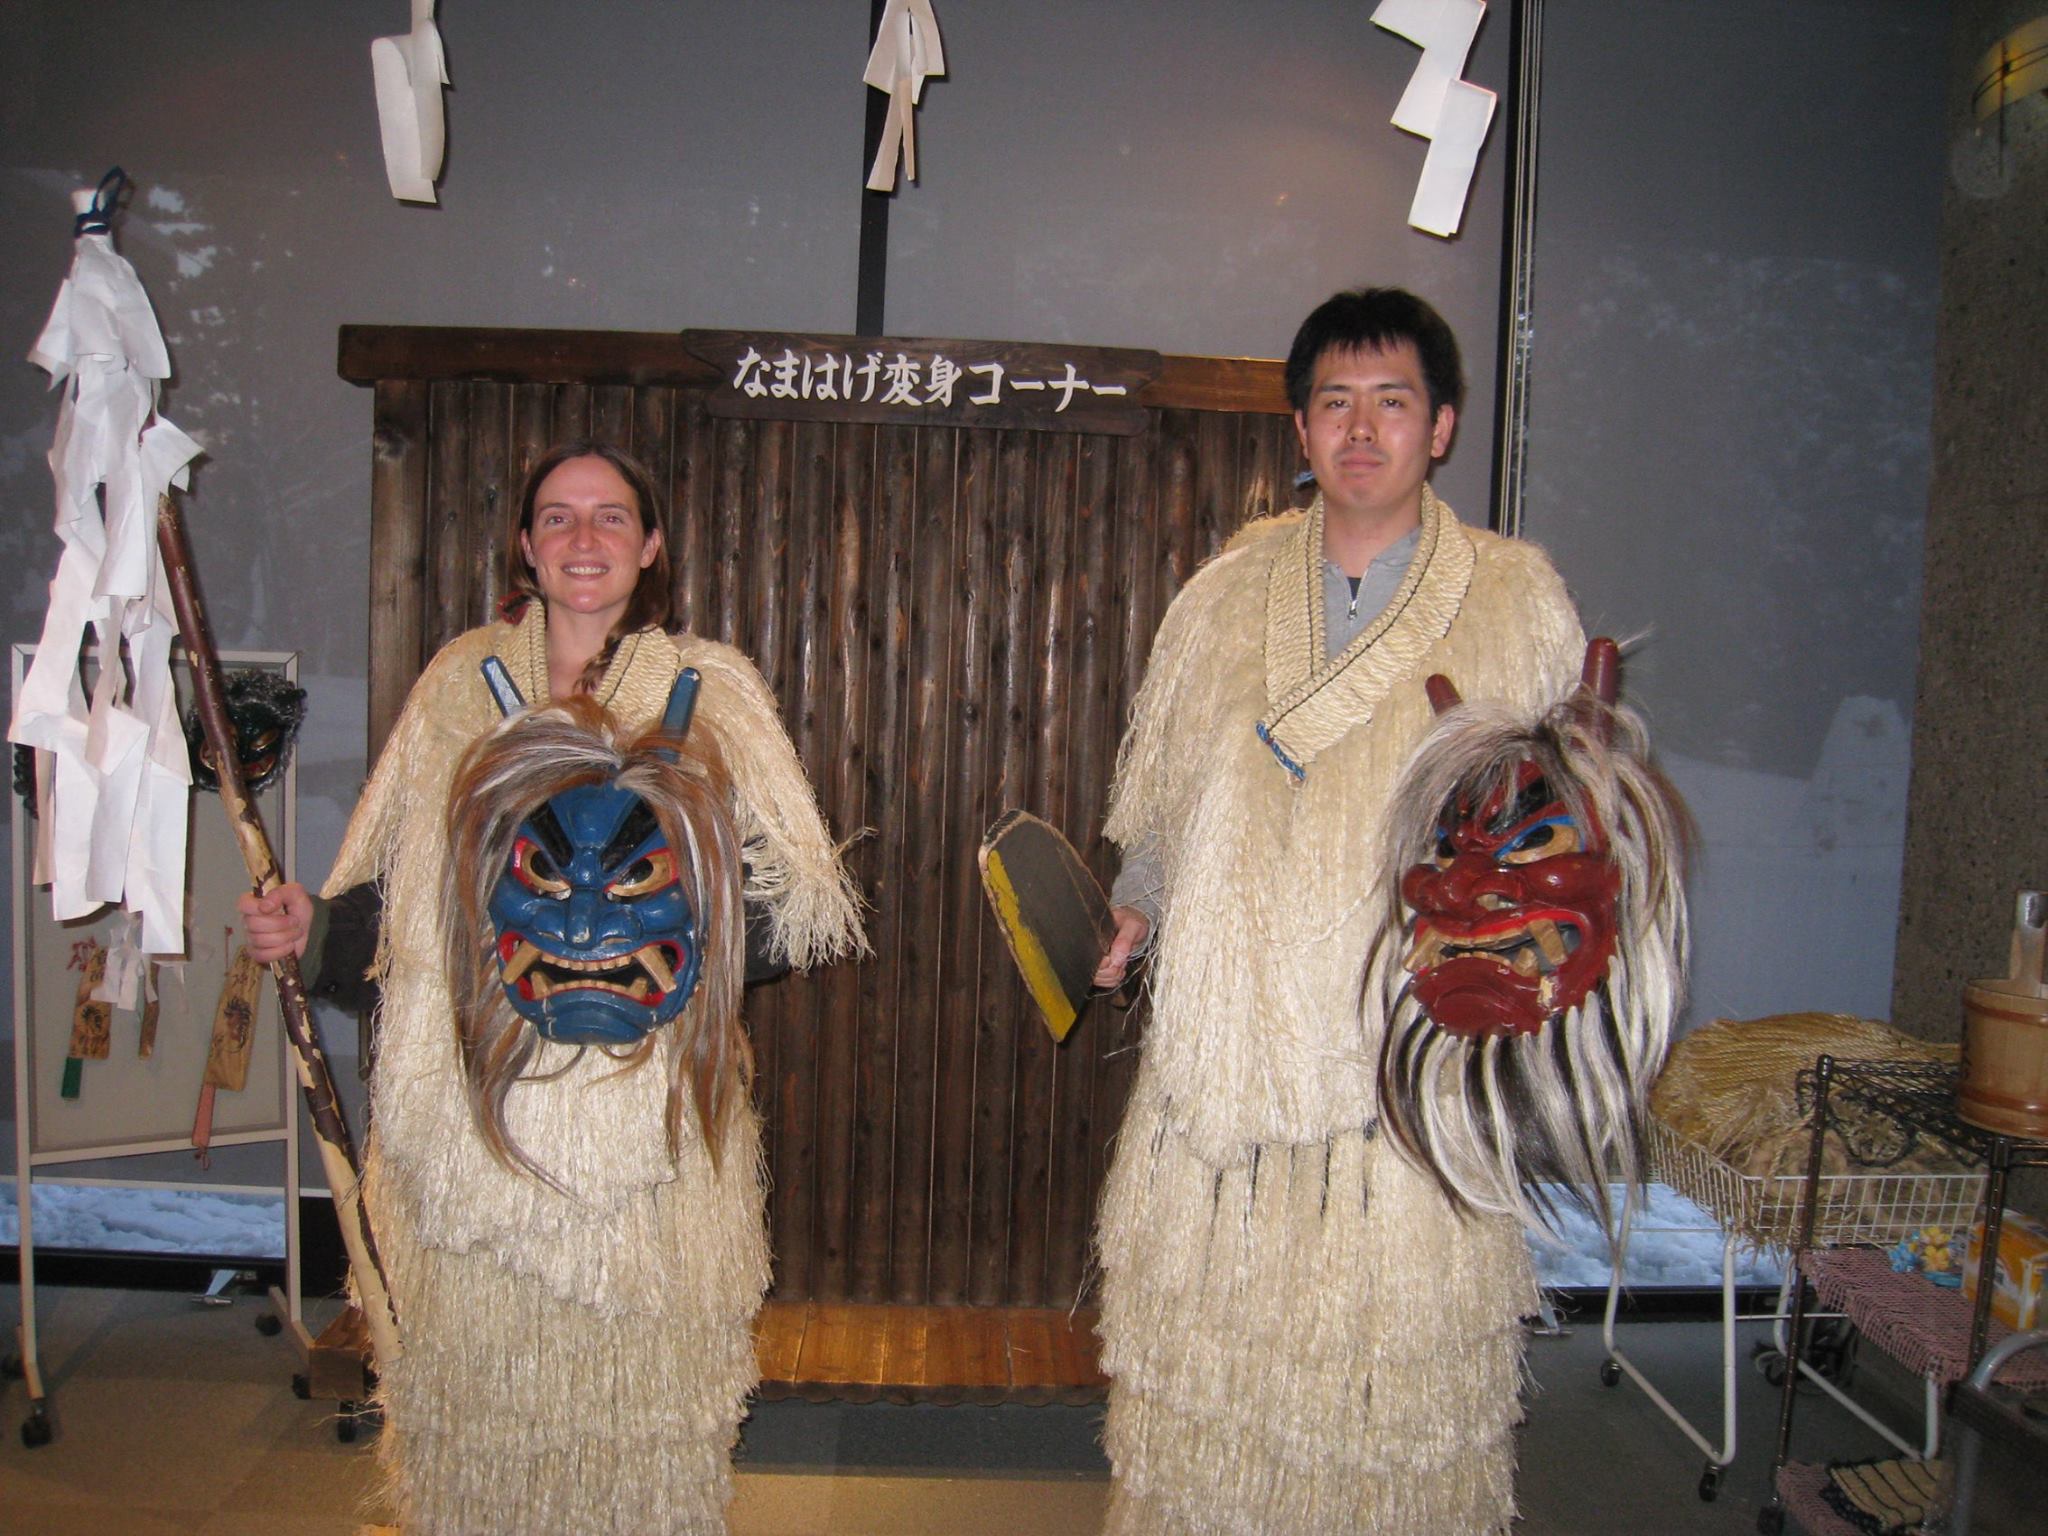 Hikaru and Chris in costume